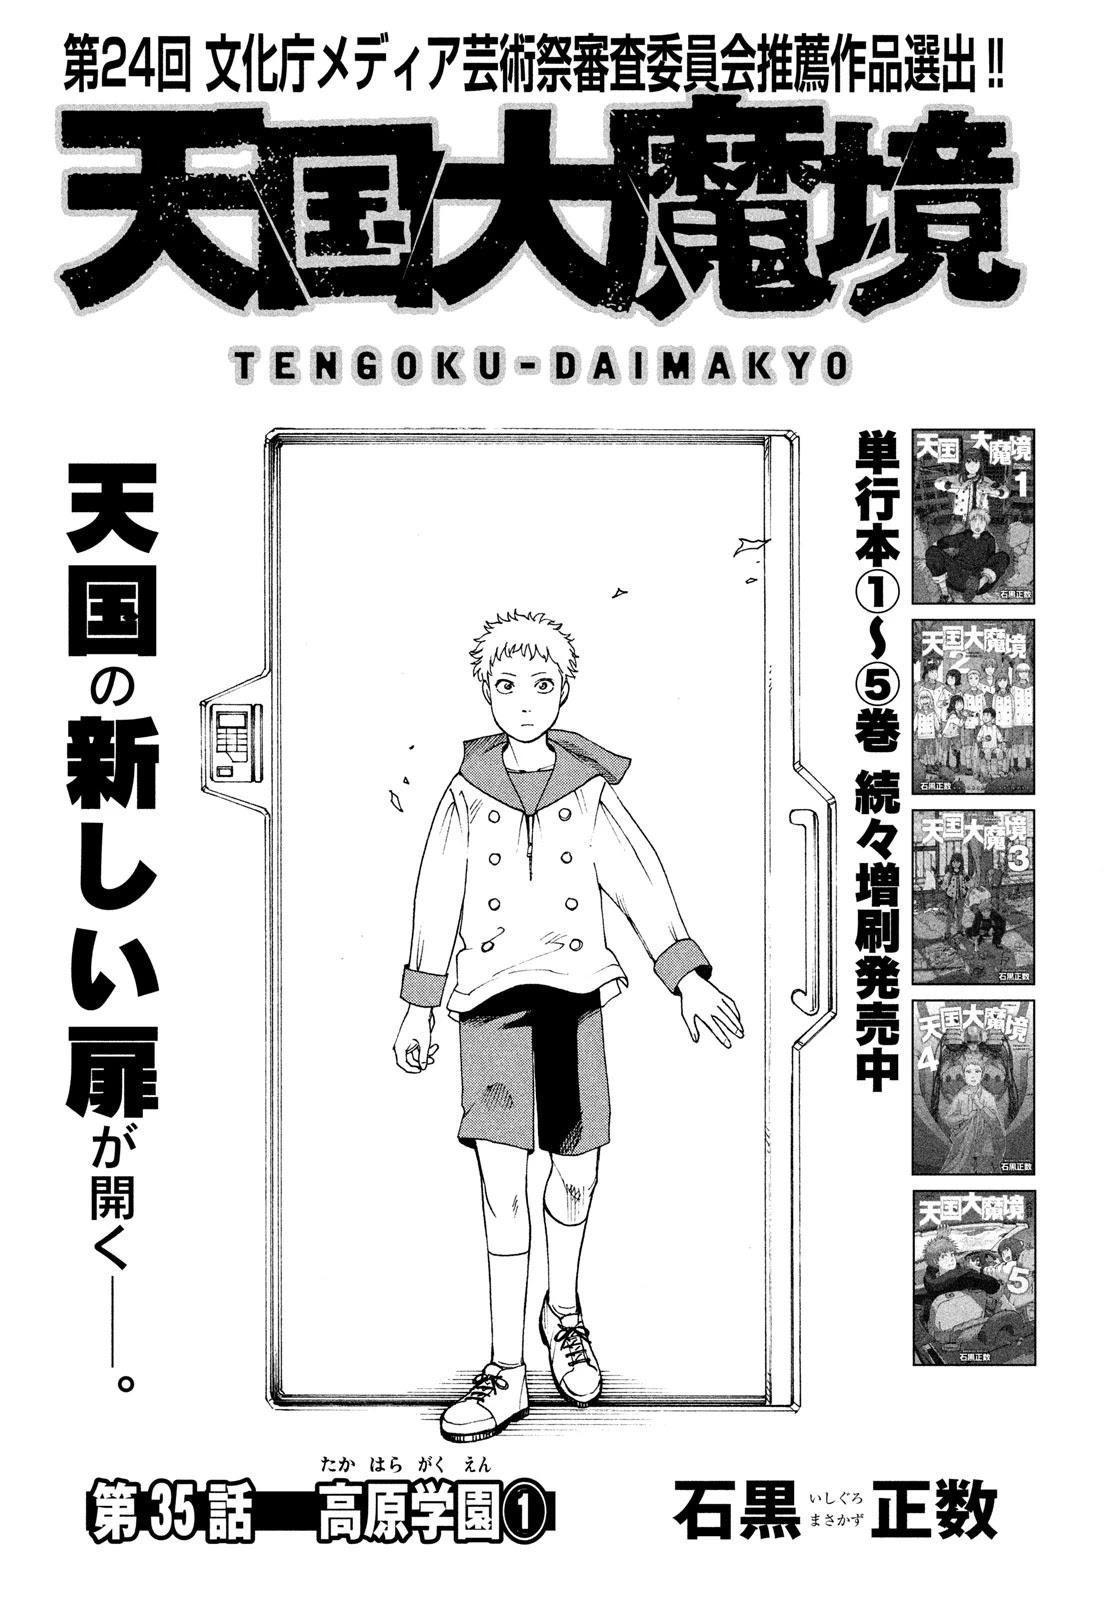 Read Tengoku Daimakyou 28 - Oni Scan